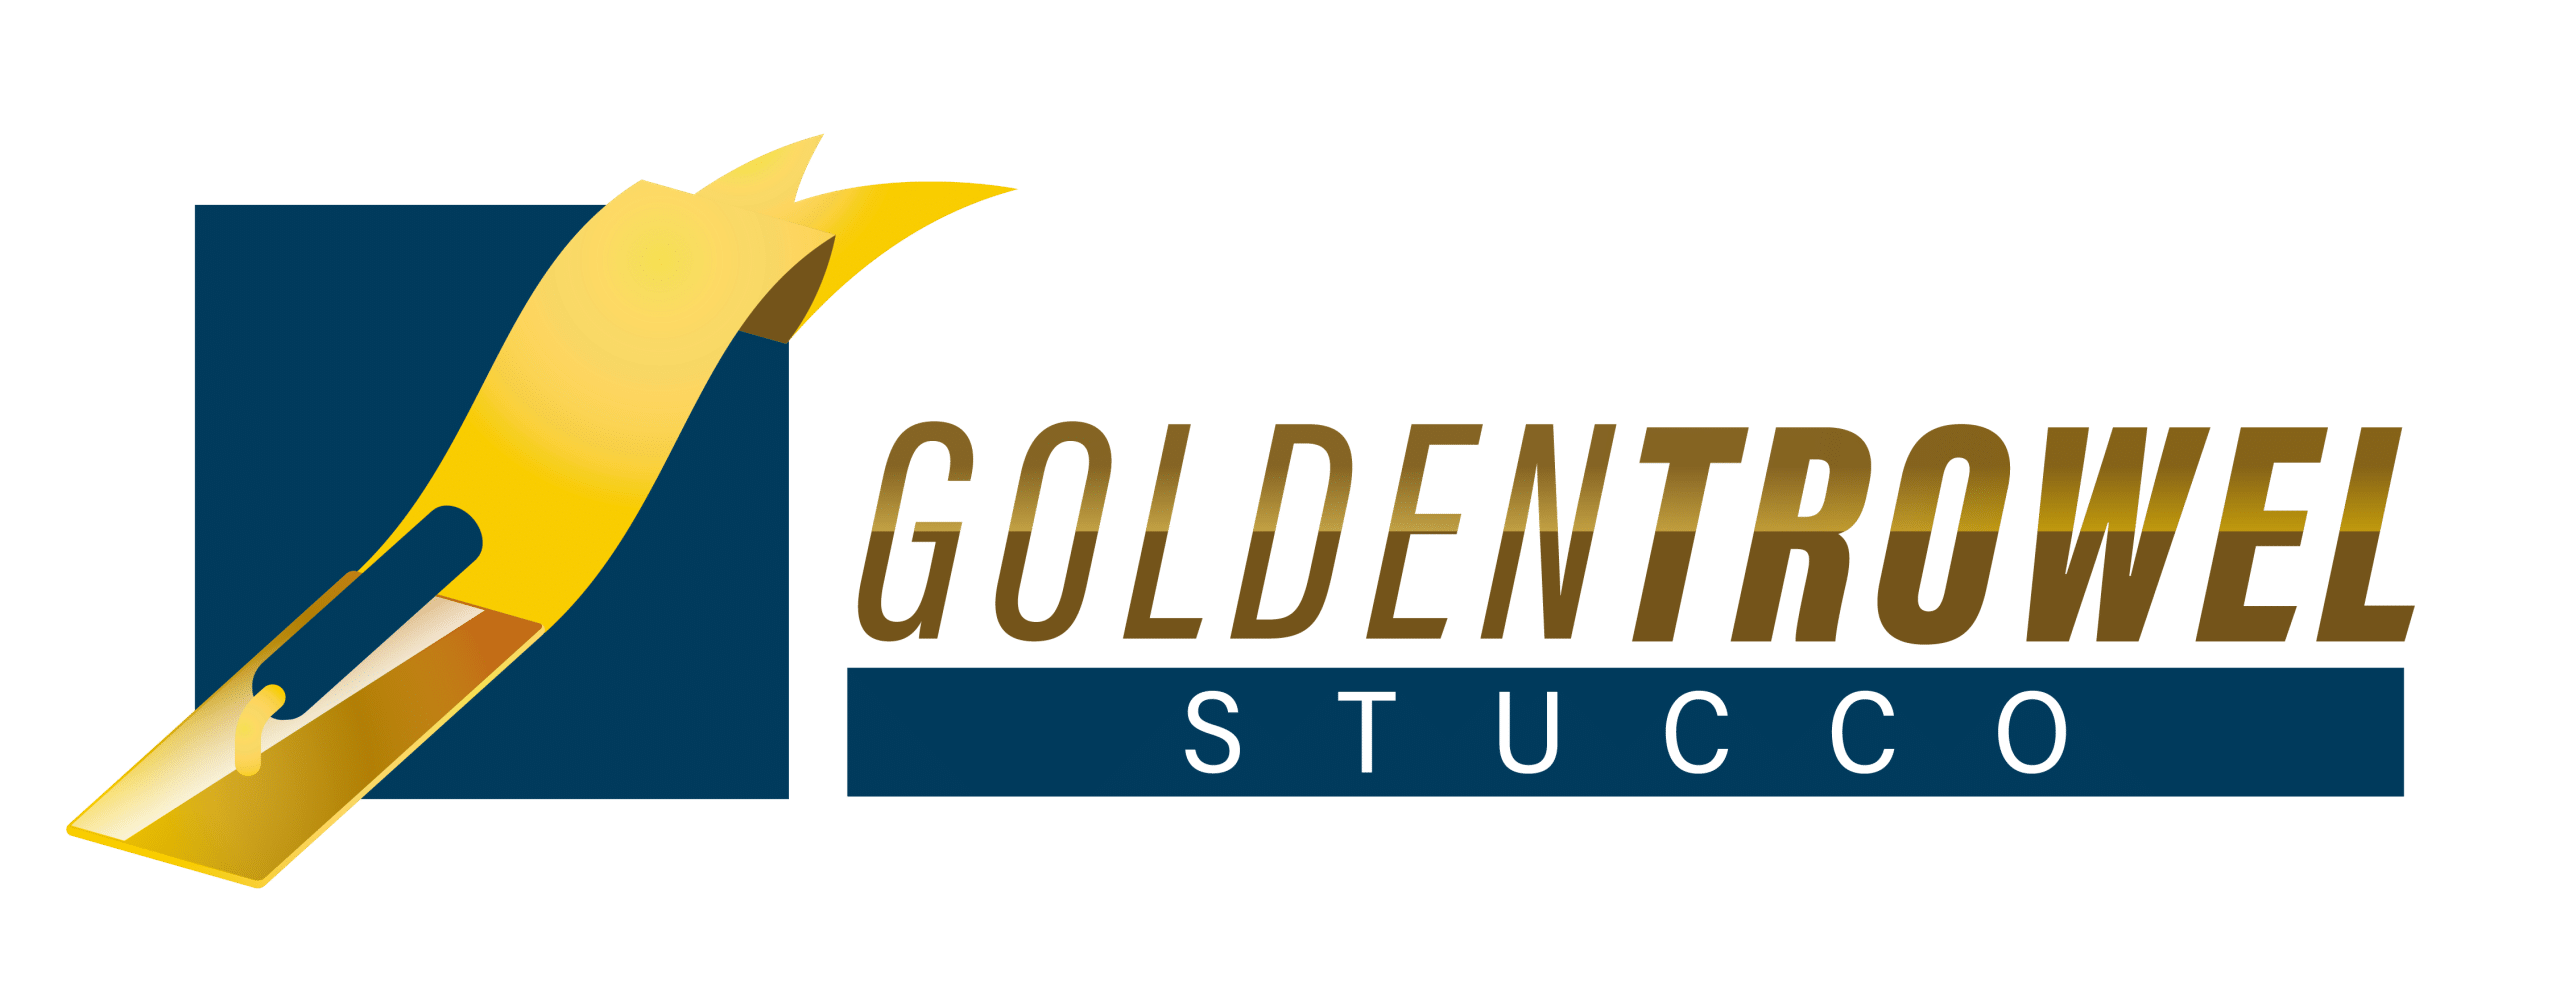 Golden Trowel Stucco Company